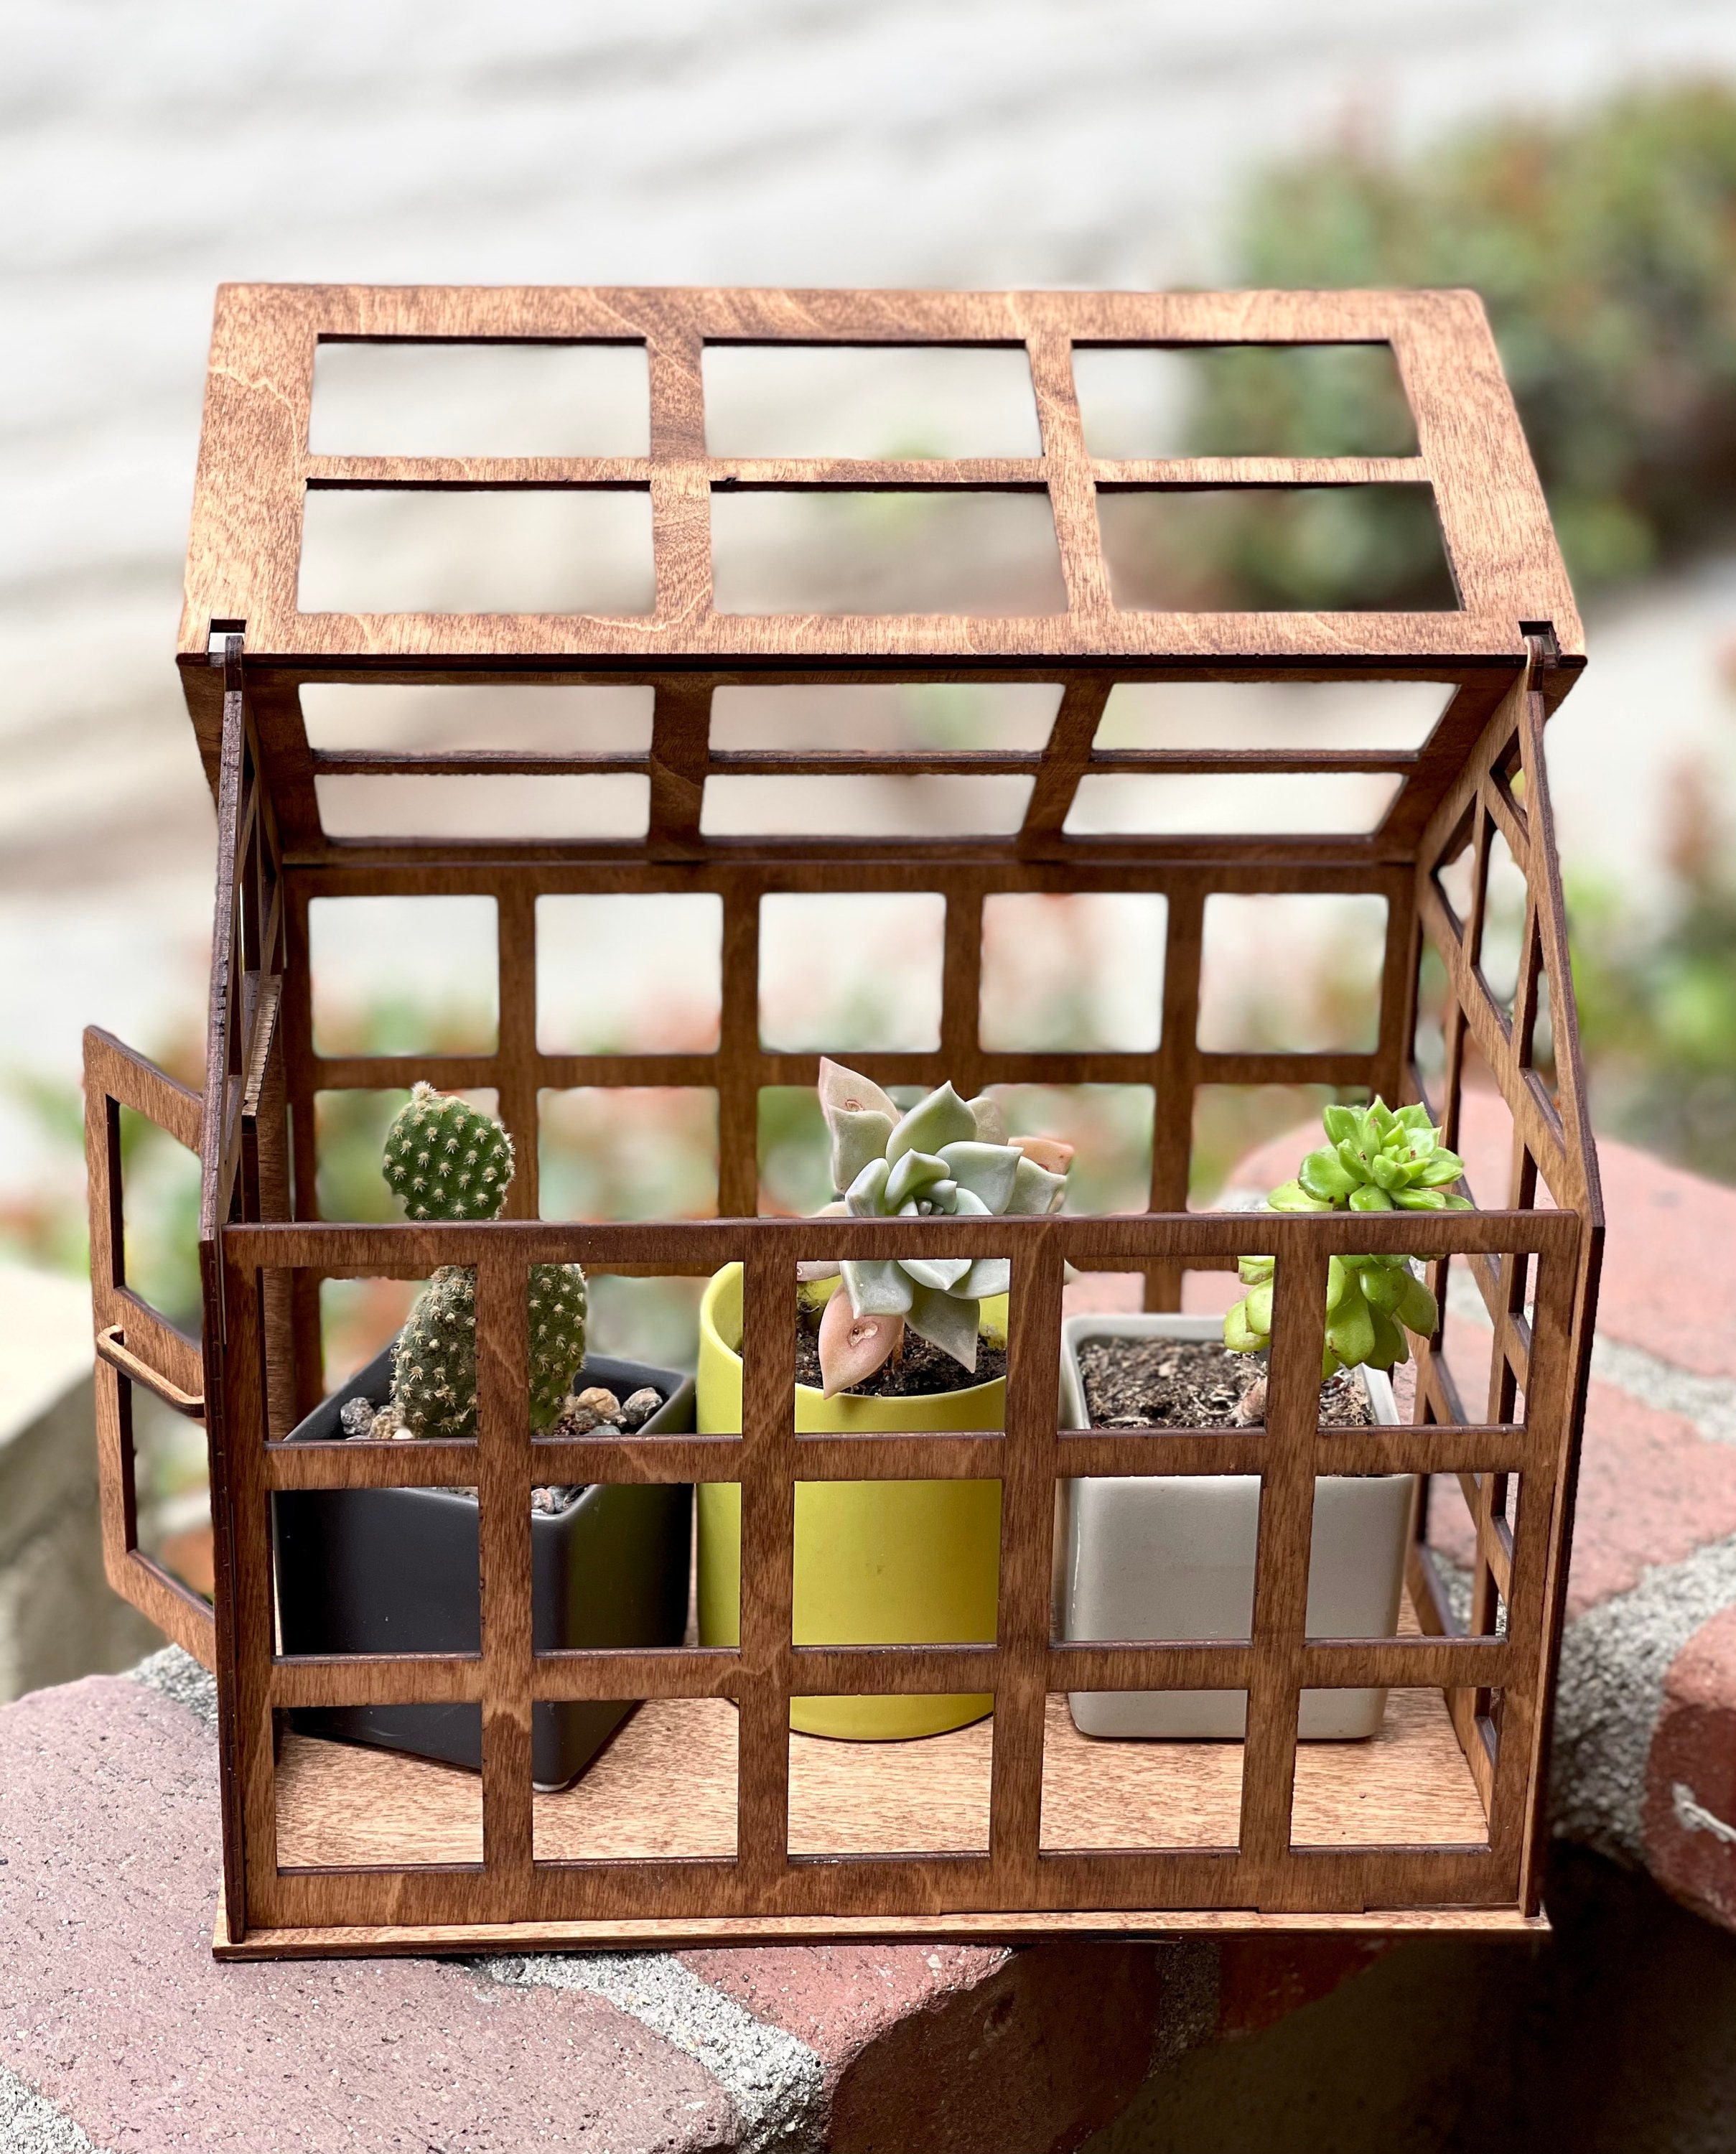  Rowood Casa de Muñecas en Miniatura Invernadero con Luz, DIY  Miniature House Maquetas para Montar Manualidades de Madera